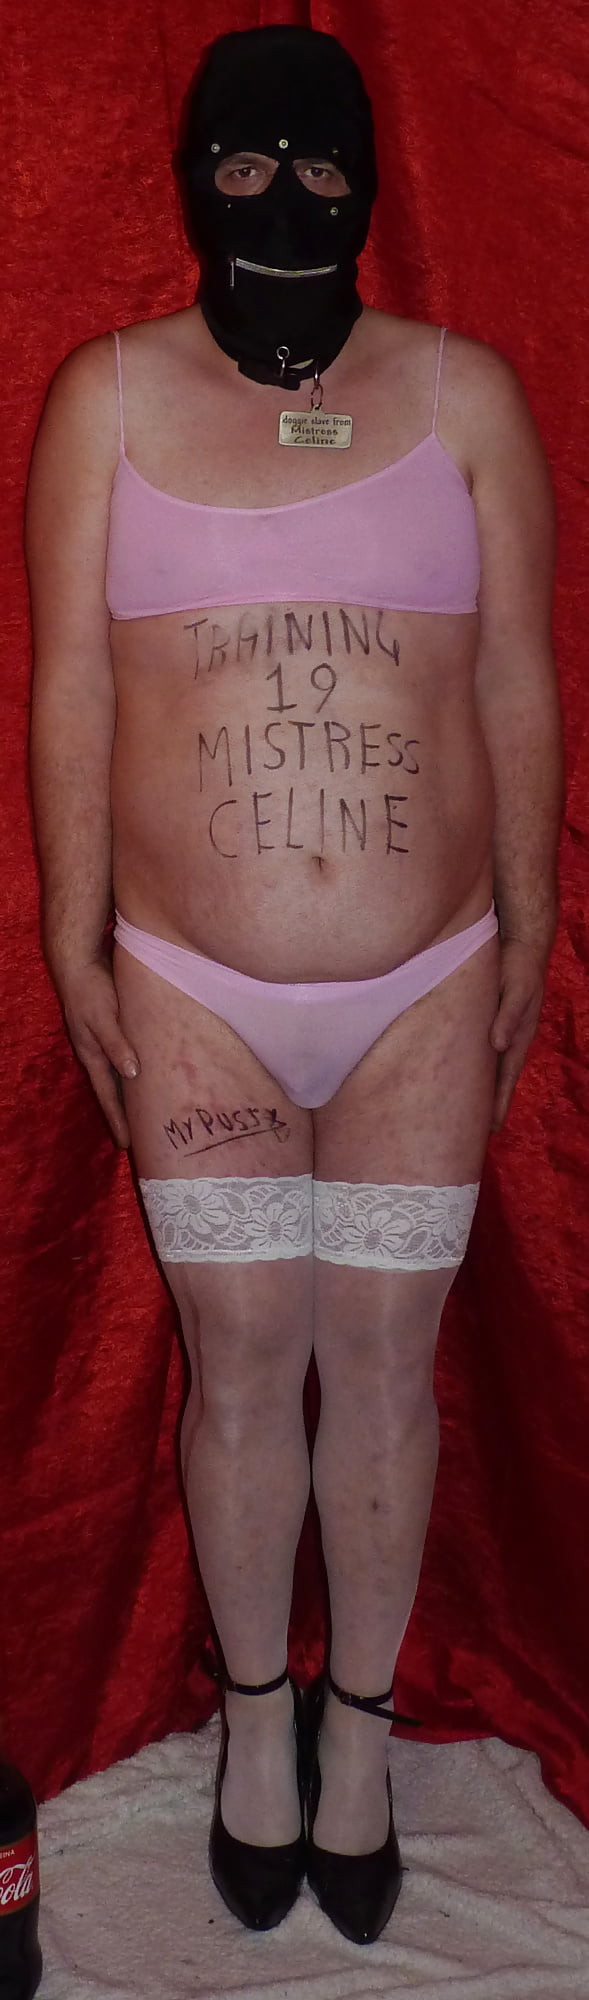 Training Day 19 - For Mistress Celine #106899613